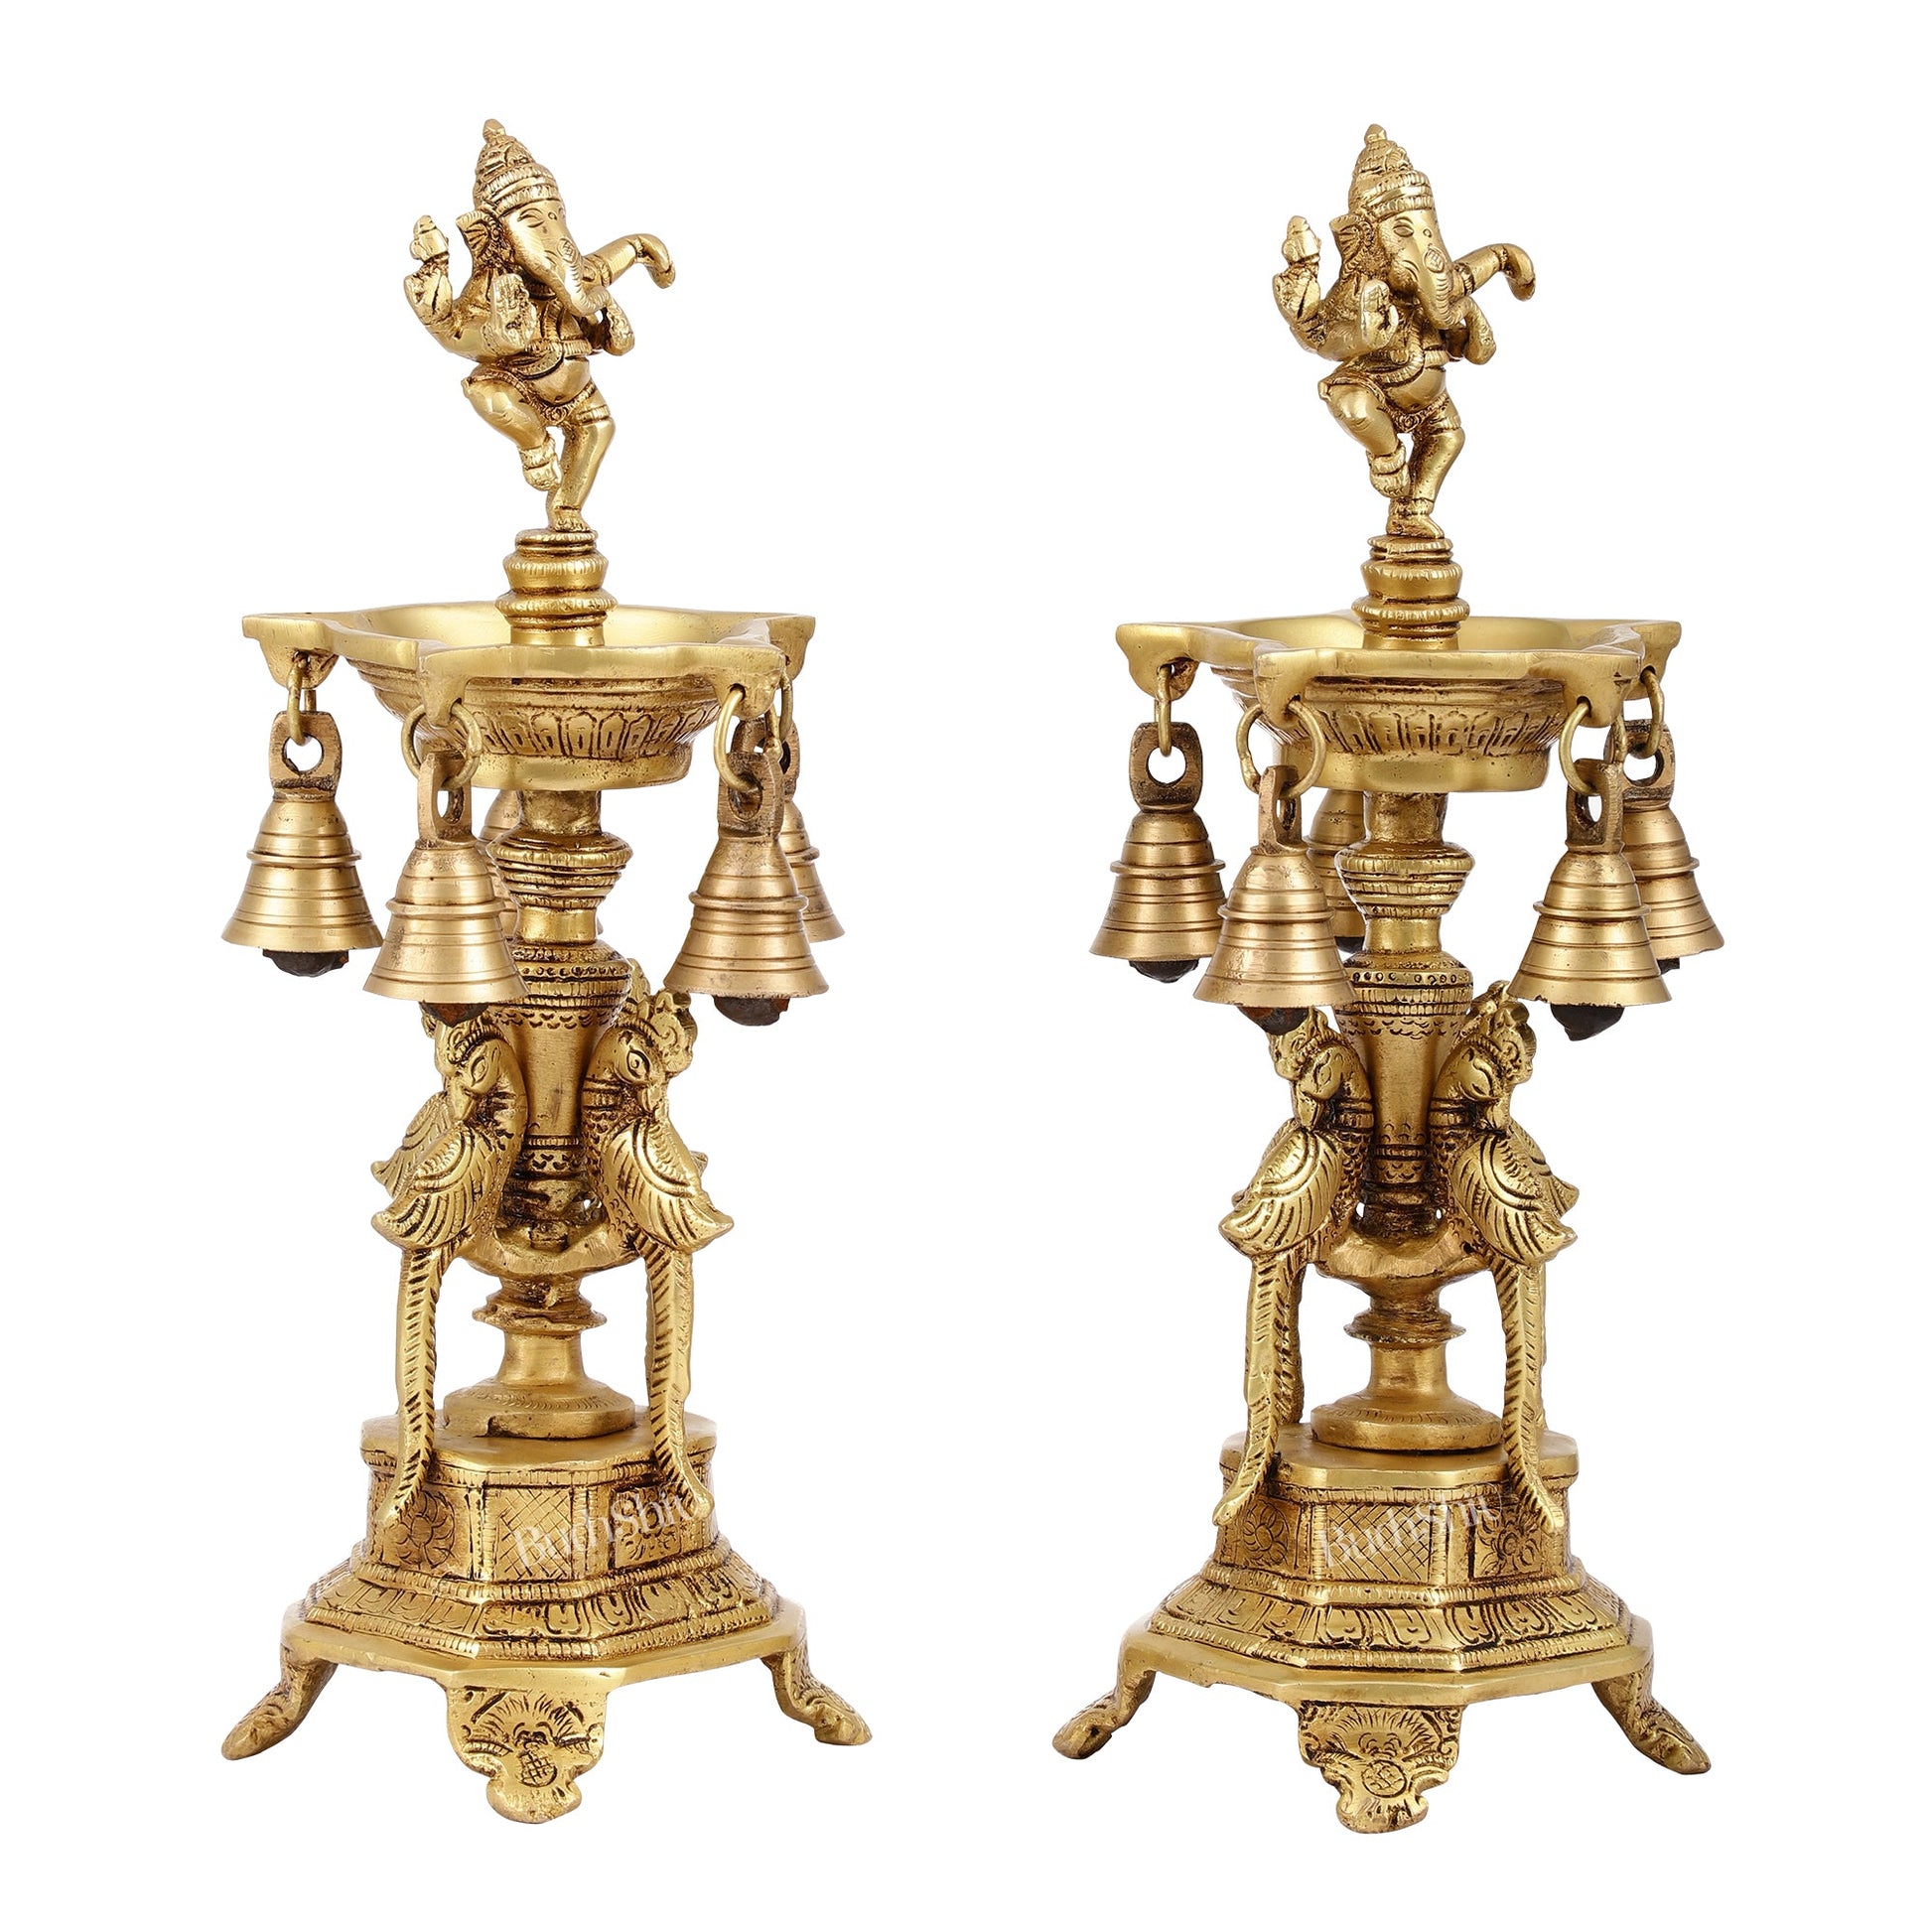 Pure Brass Dancing Ganesha Lamps with Peacocks Superfine Quality - Budhshiv.com